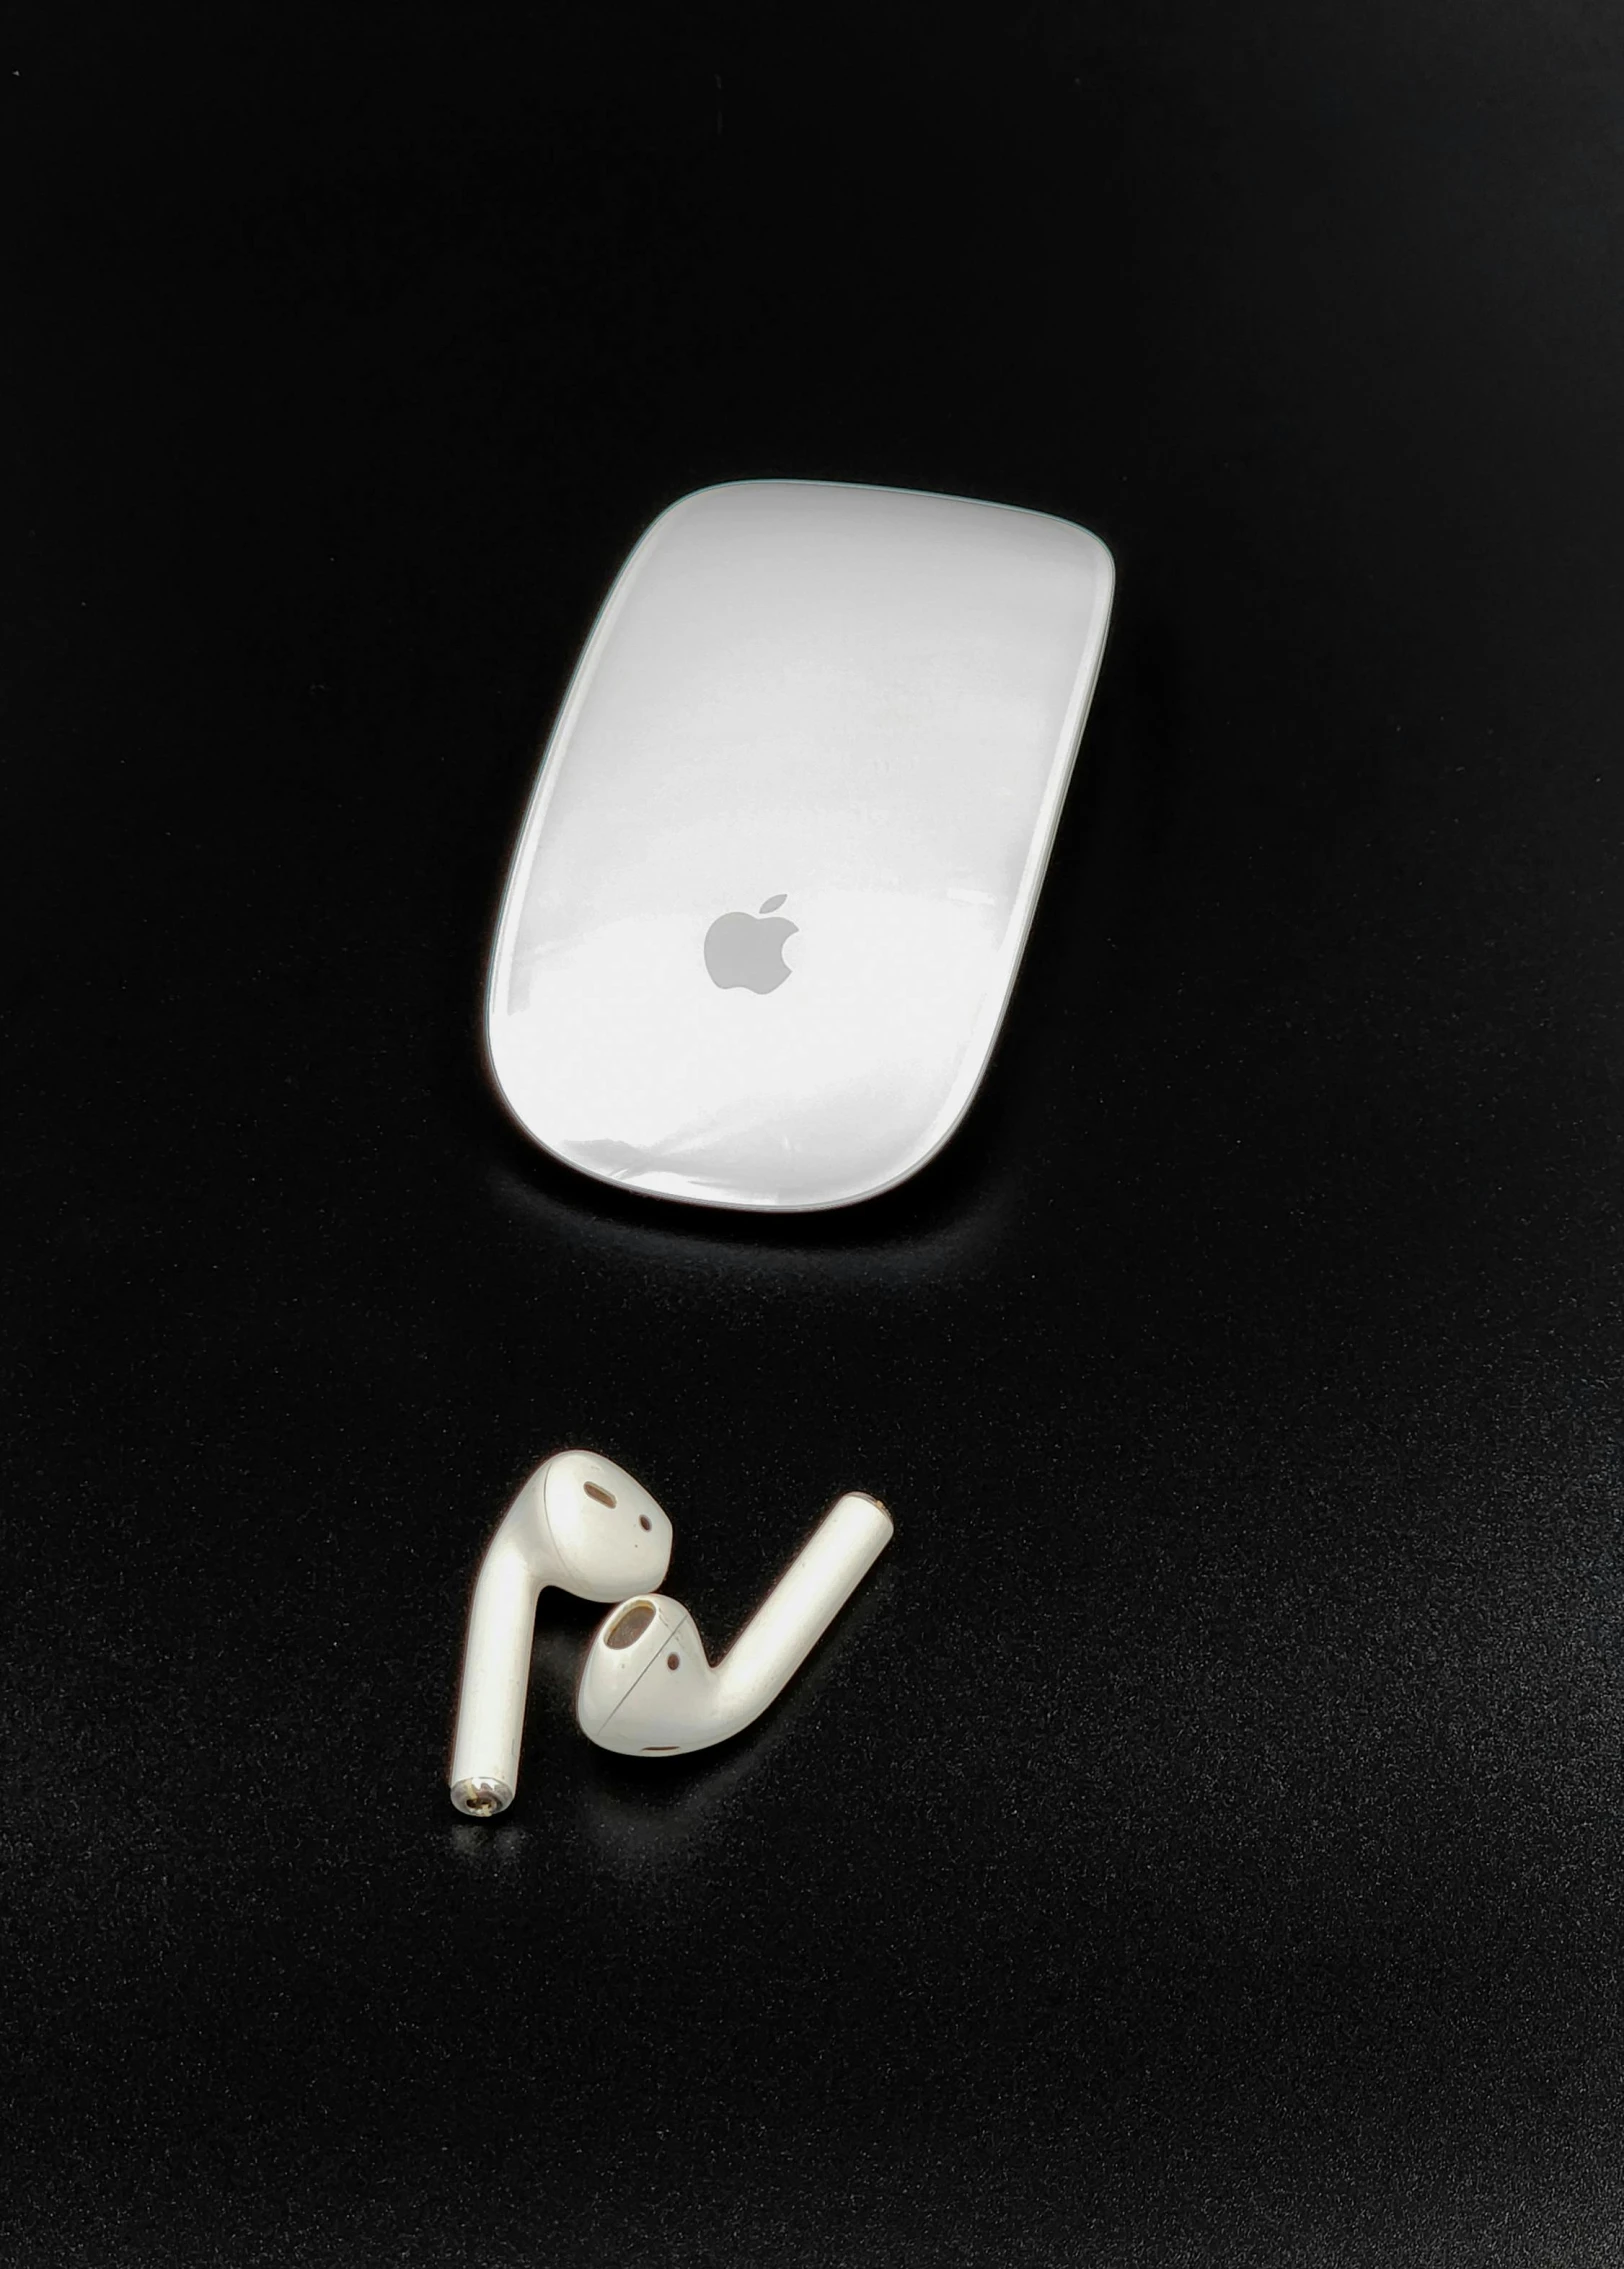 there is an earplug near the apple logo